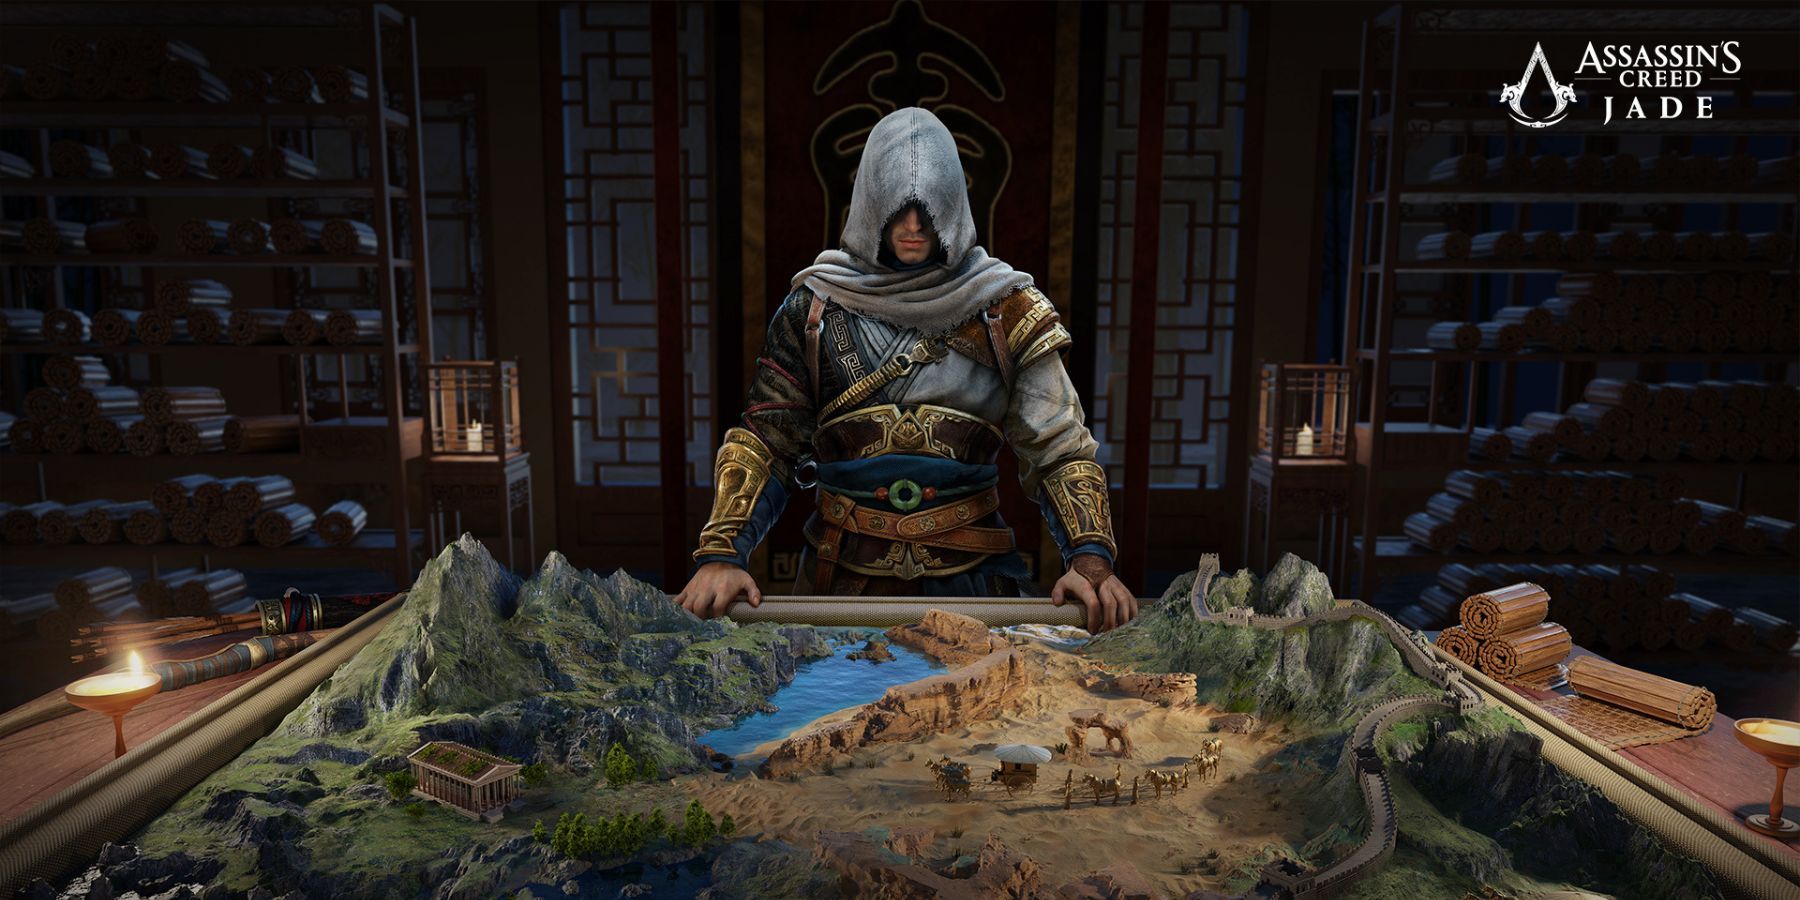 Assassin's Creed Jade Timeline